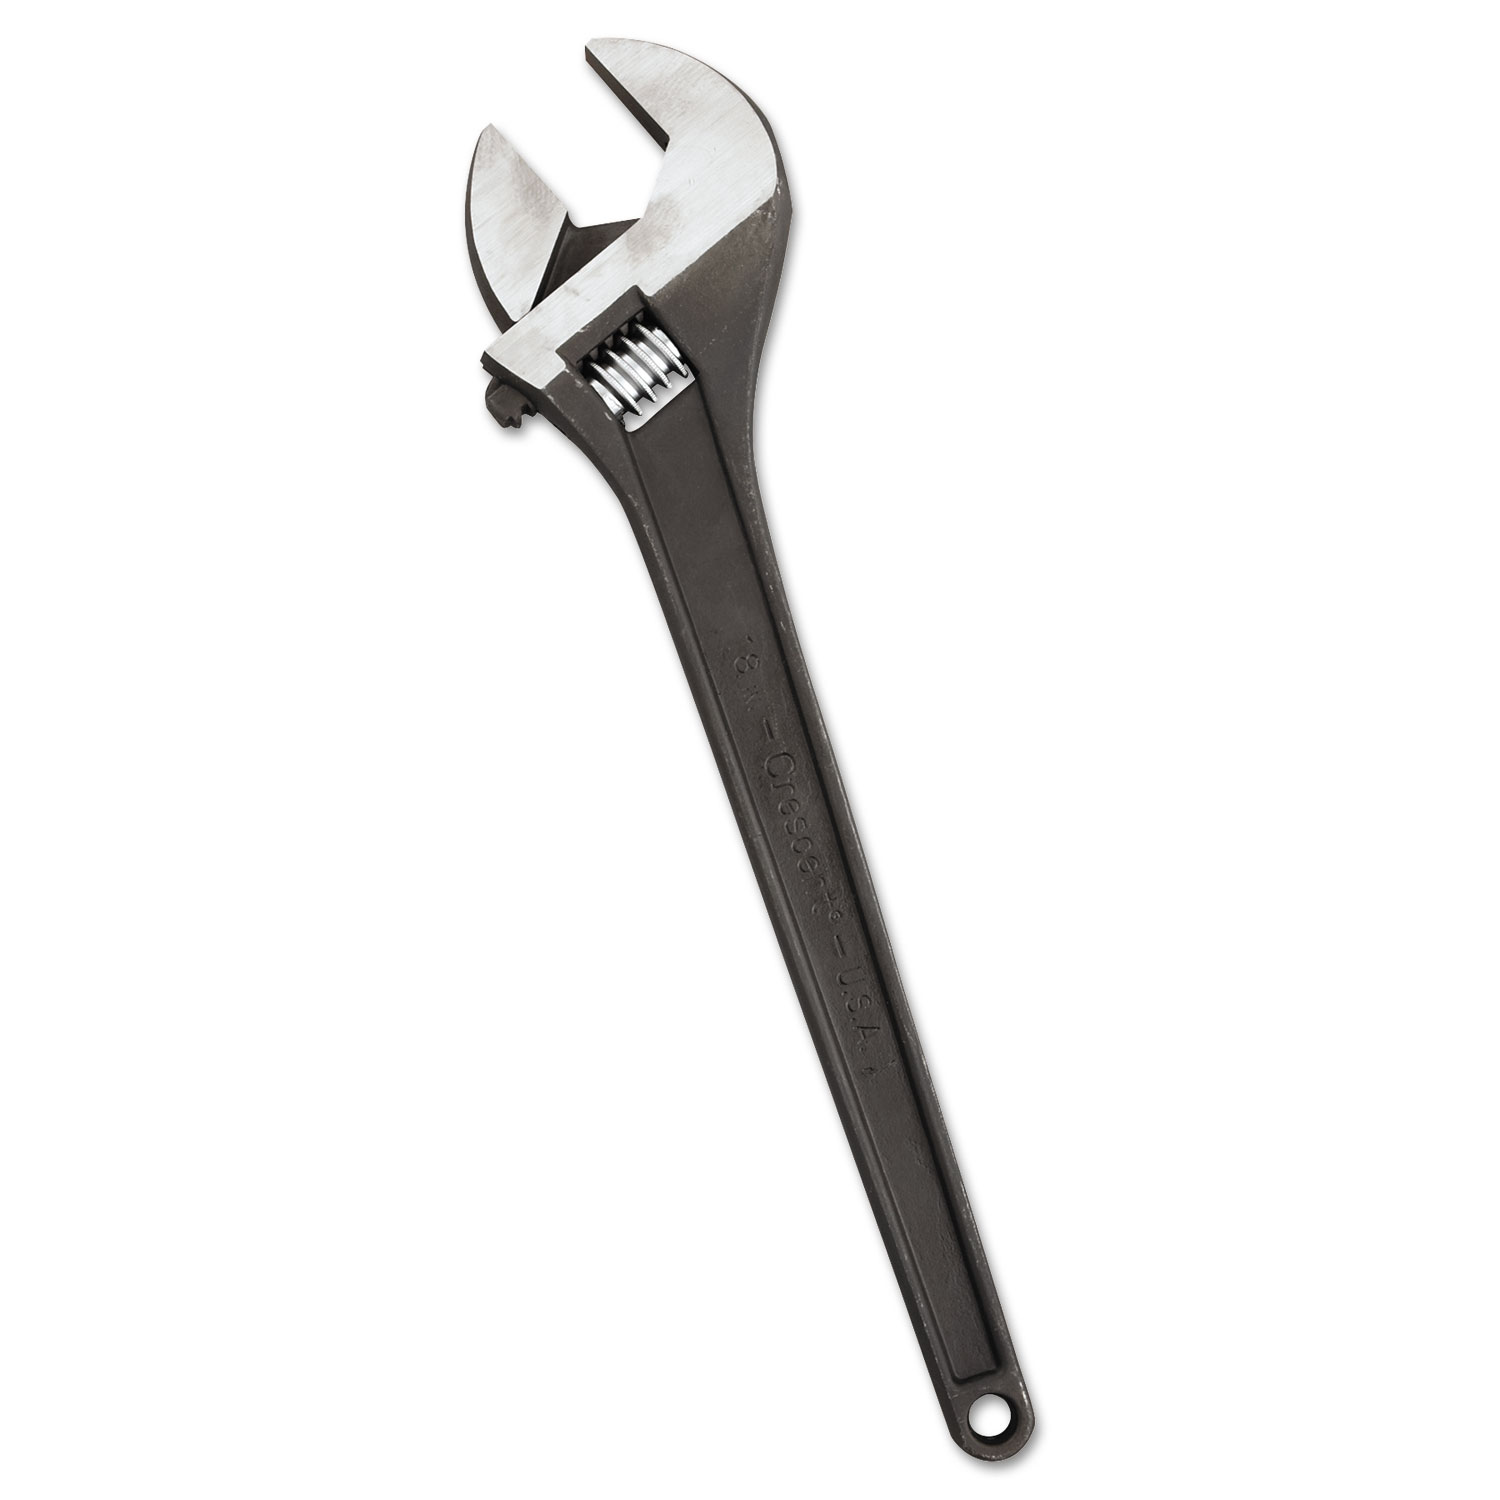 Crescent Adjustable Wrench, 18 Long, 2 1/16 Opening, Black Phosphate Finish